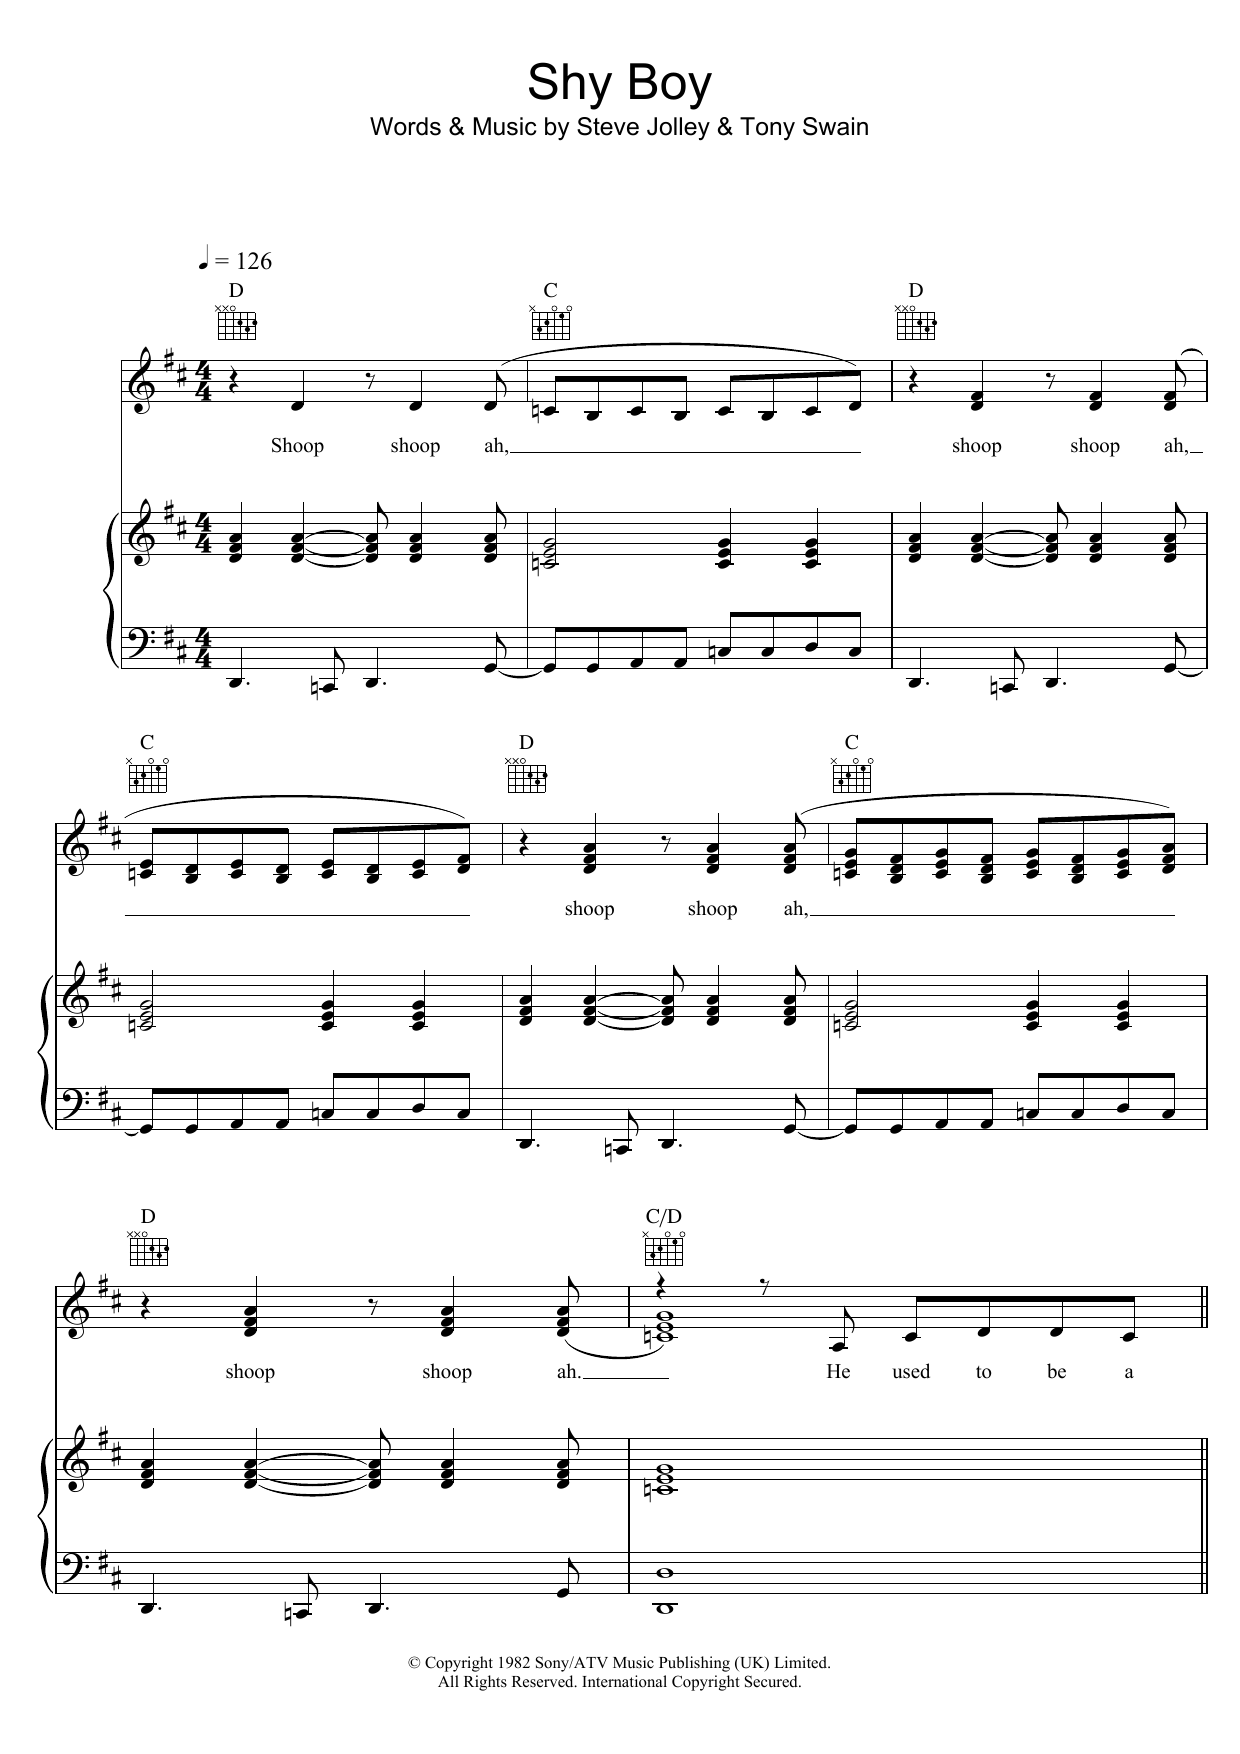 Bananarama Shy Boy Sheet Music Notes & Chords for Piano, Vocal & Guitar - Download or Print PDF